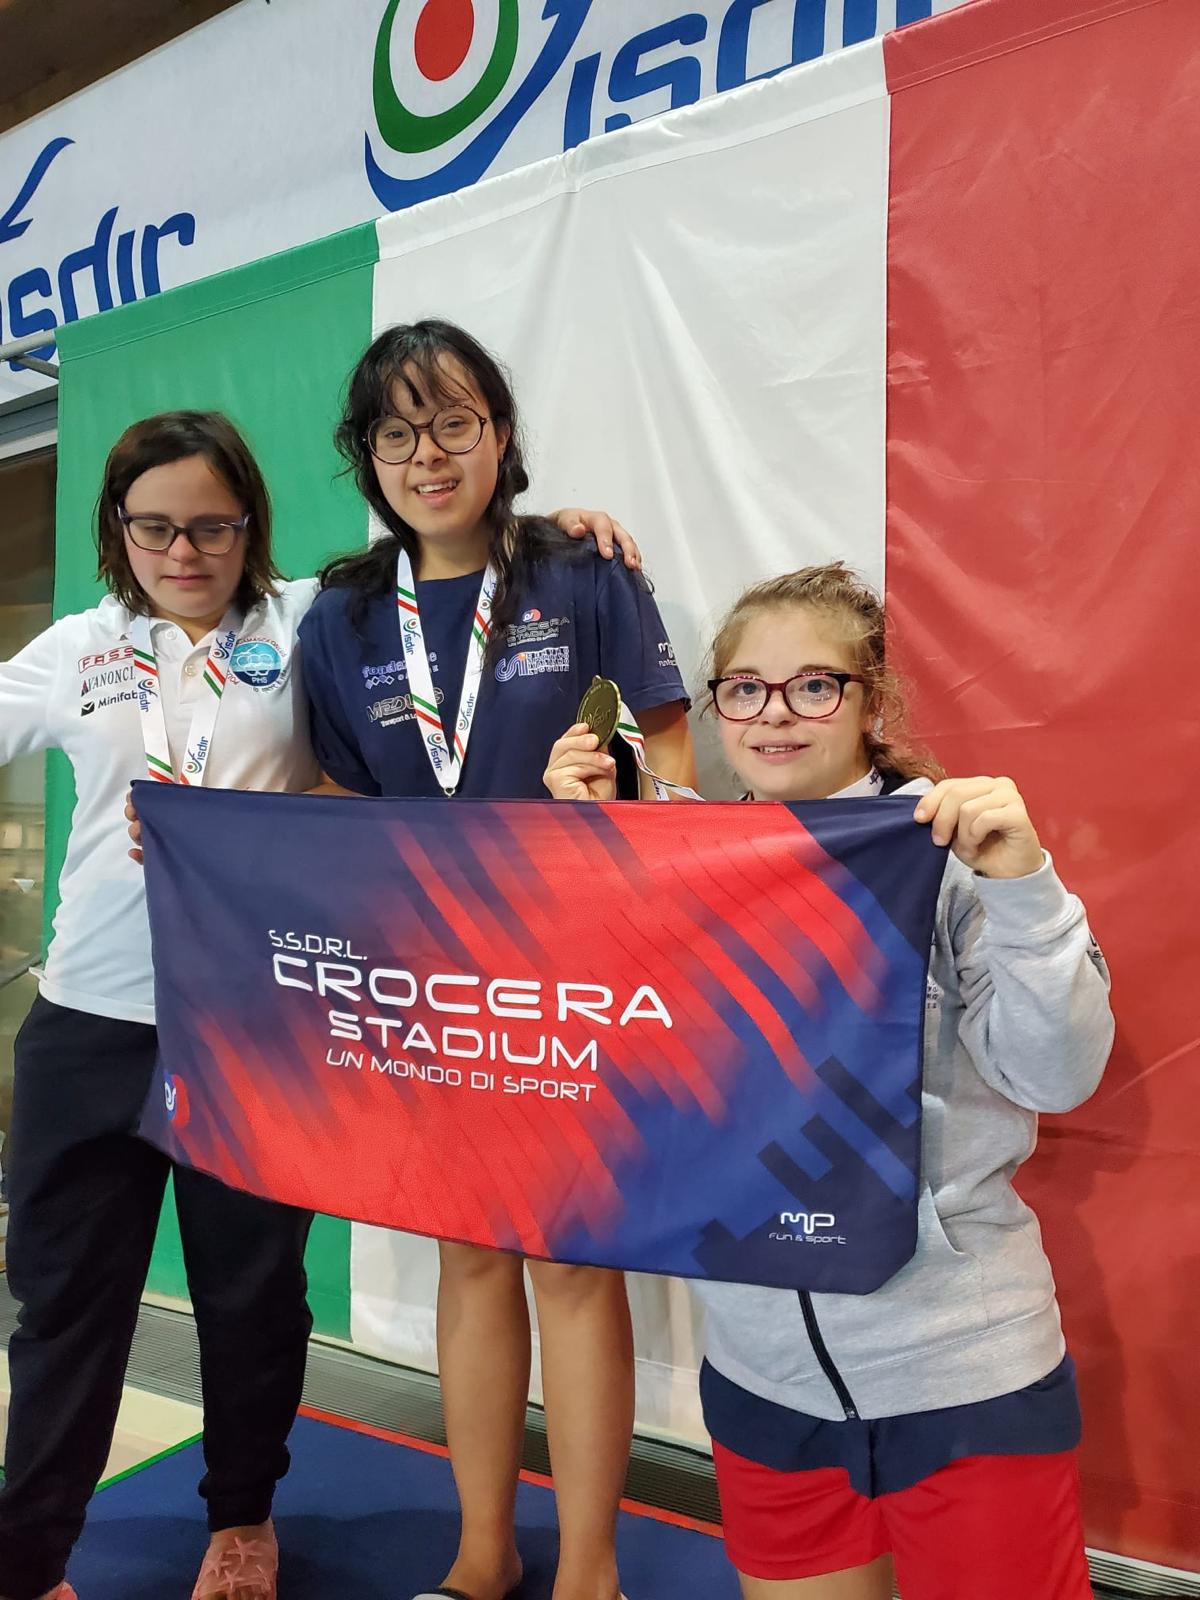 Tre ragazze su un podio, tengono in mano una bandiera con scritto "Crocera stadium"